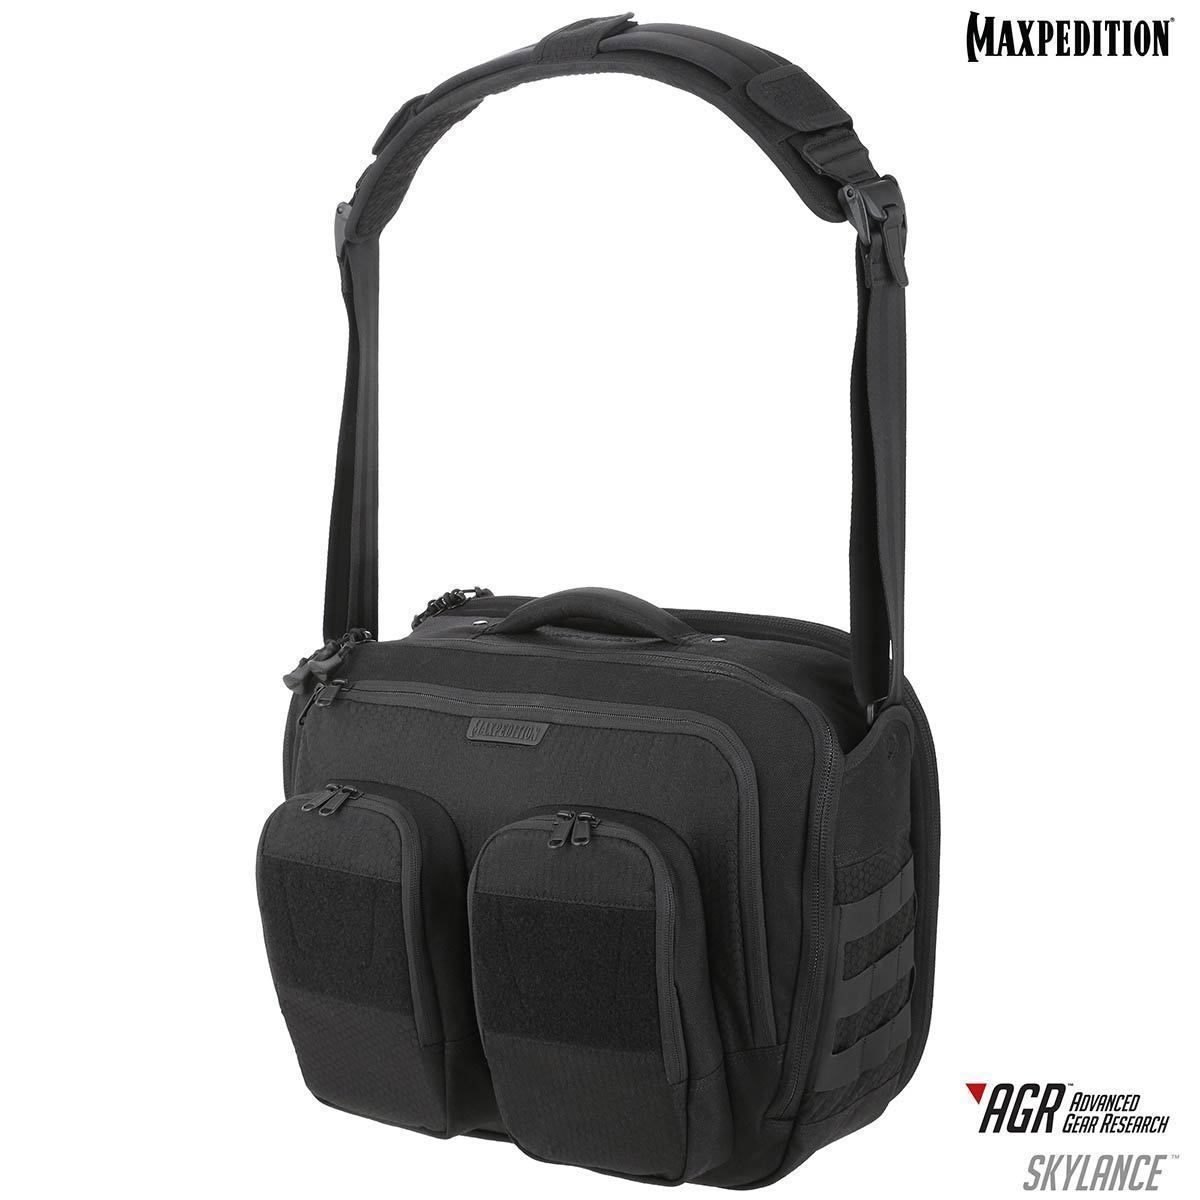 Maxpedition Skylance Tech Gear Bag 28L Bags, Packs and Cases Maxpedition Gray Tactical Gear Supplier Tactical Distributors Australia